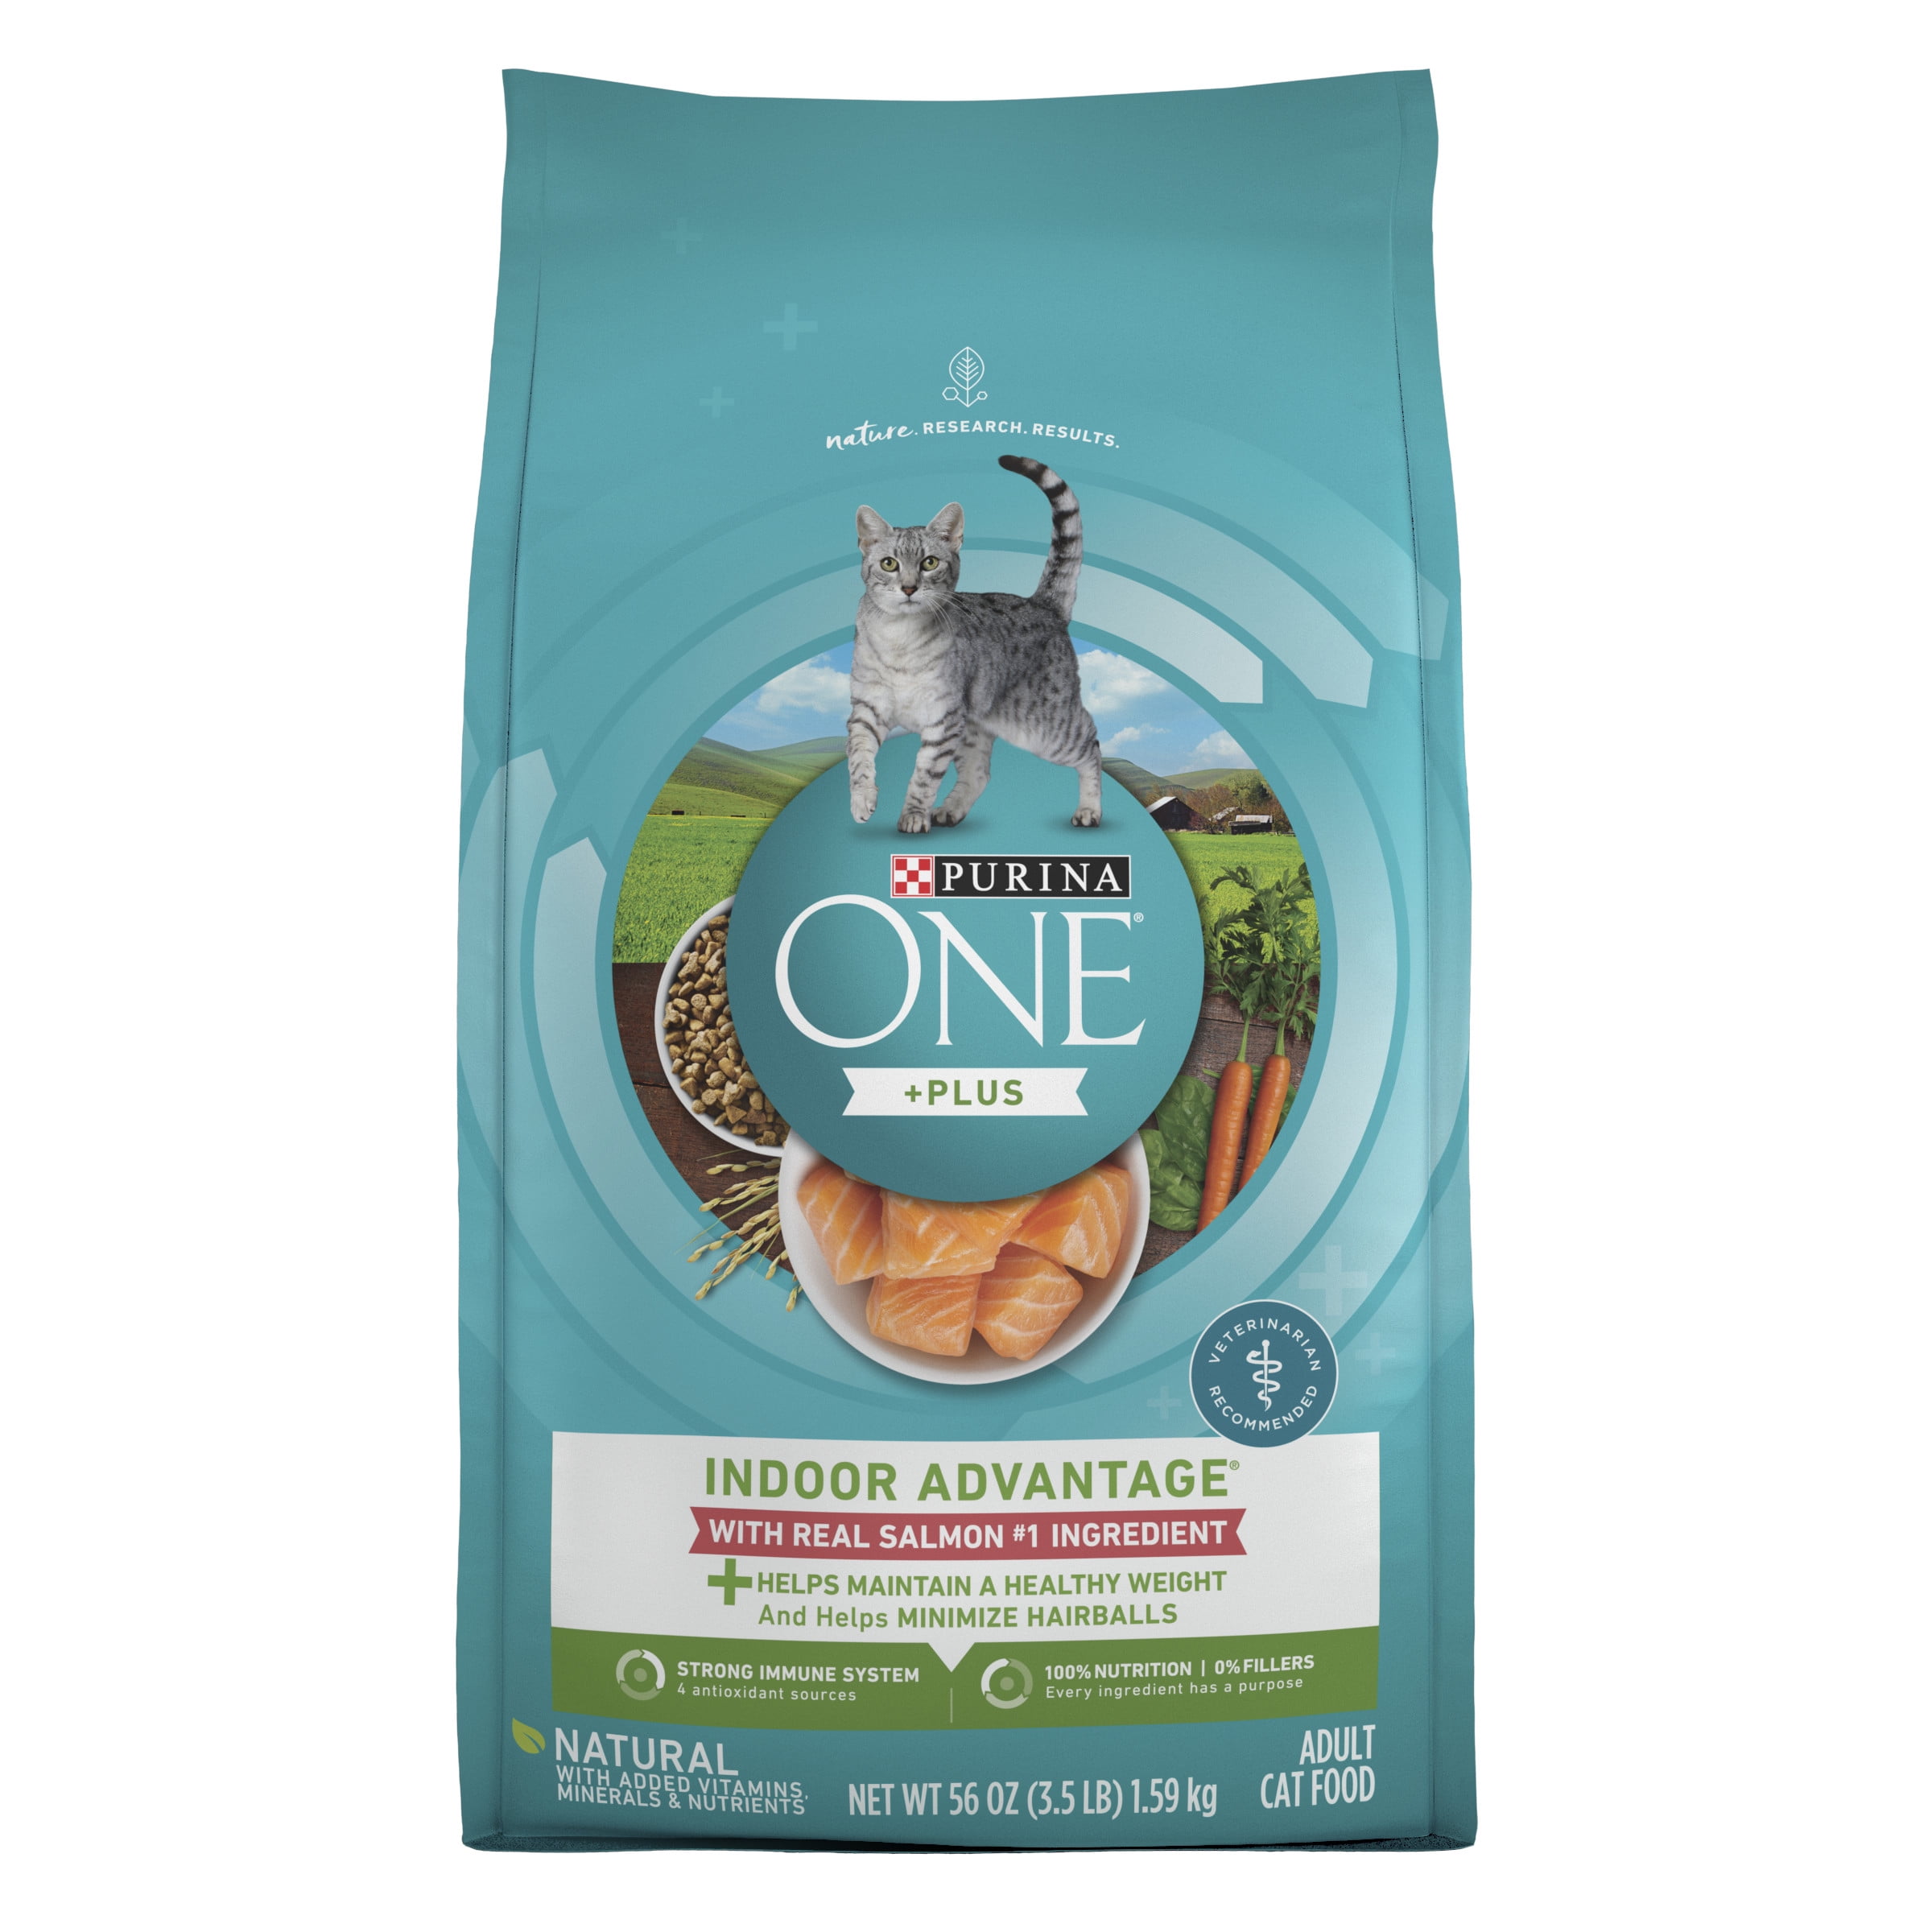 Purina One +Plus Indoor Advantage Salmon Dry Cat Food, 3.5 lb Bag